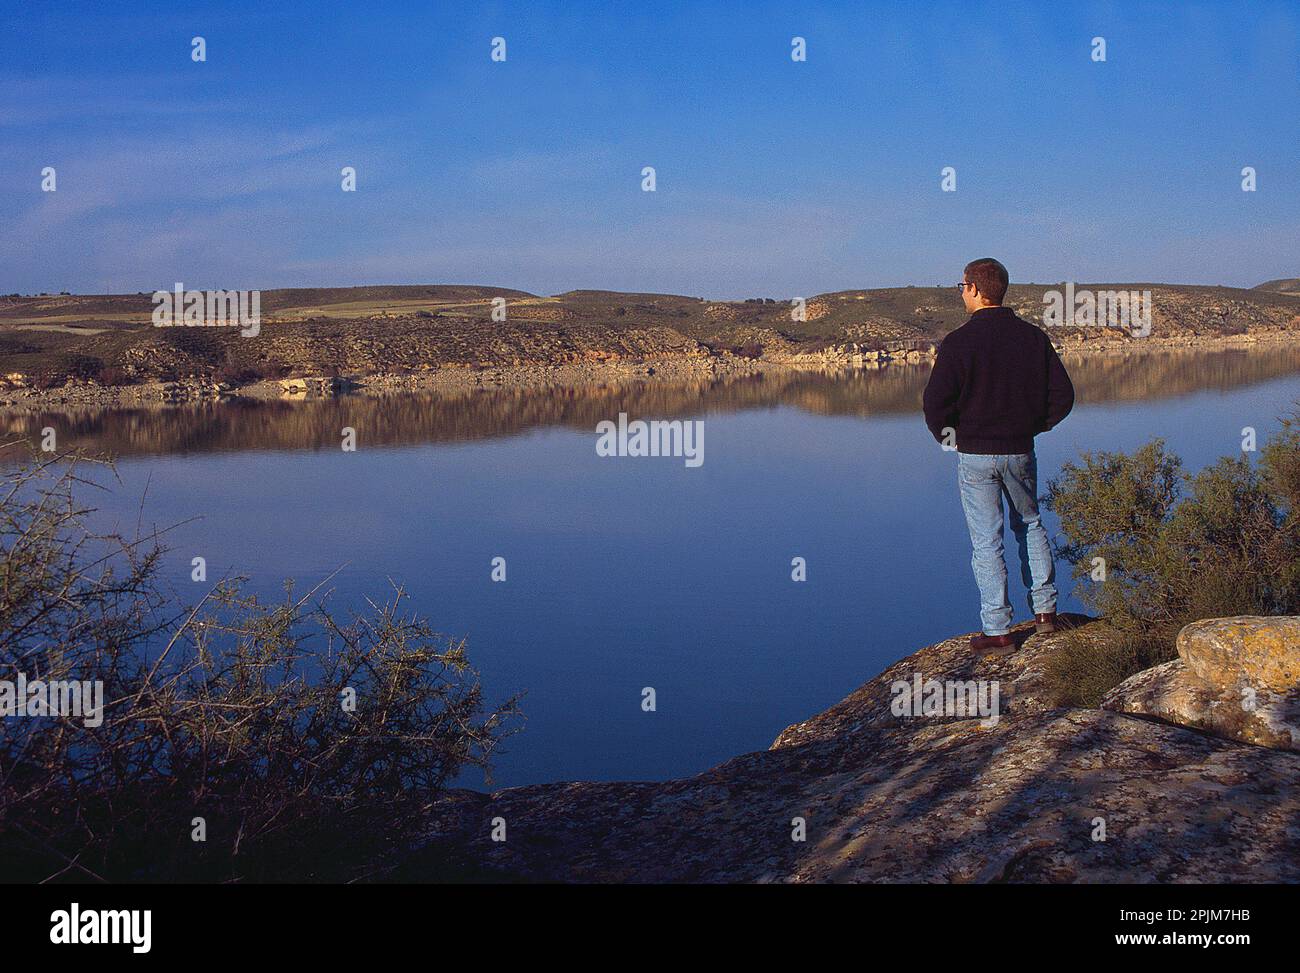 Mequinenza reservoir. Caspe, Zaragoza province, Aragon, Spain. Stock Photo